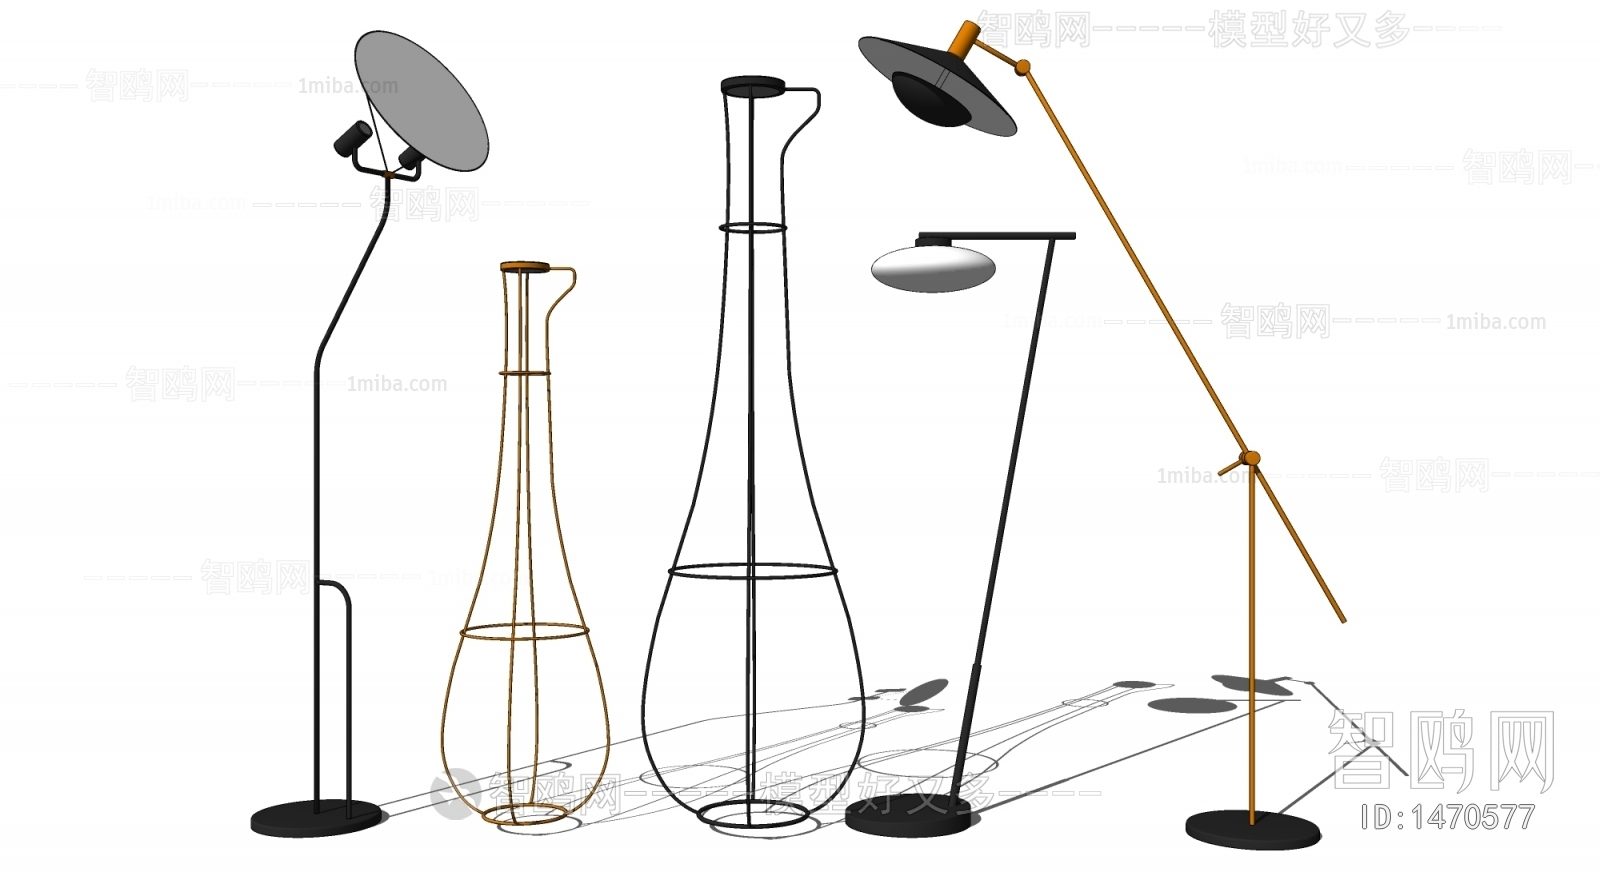 Modern Nordic Style Floor Lamp